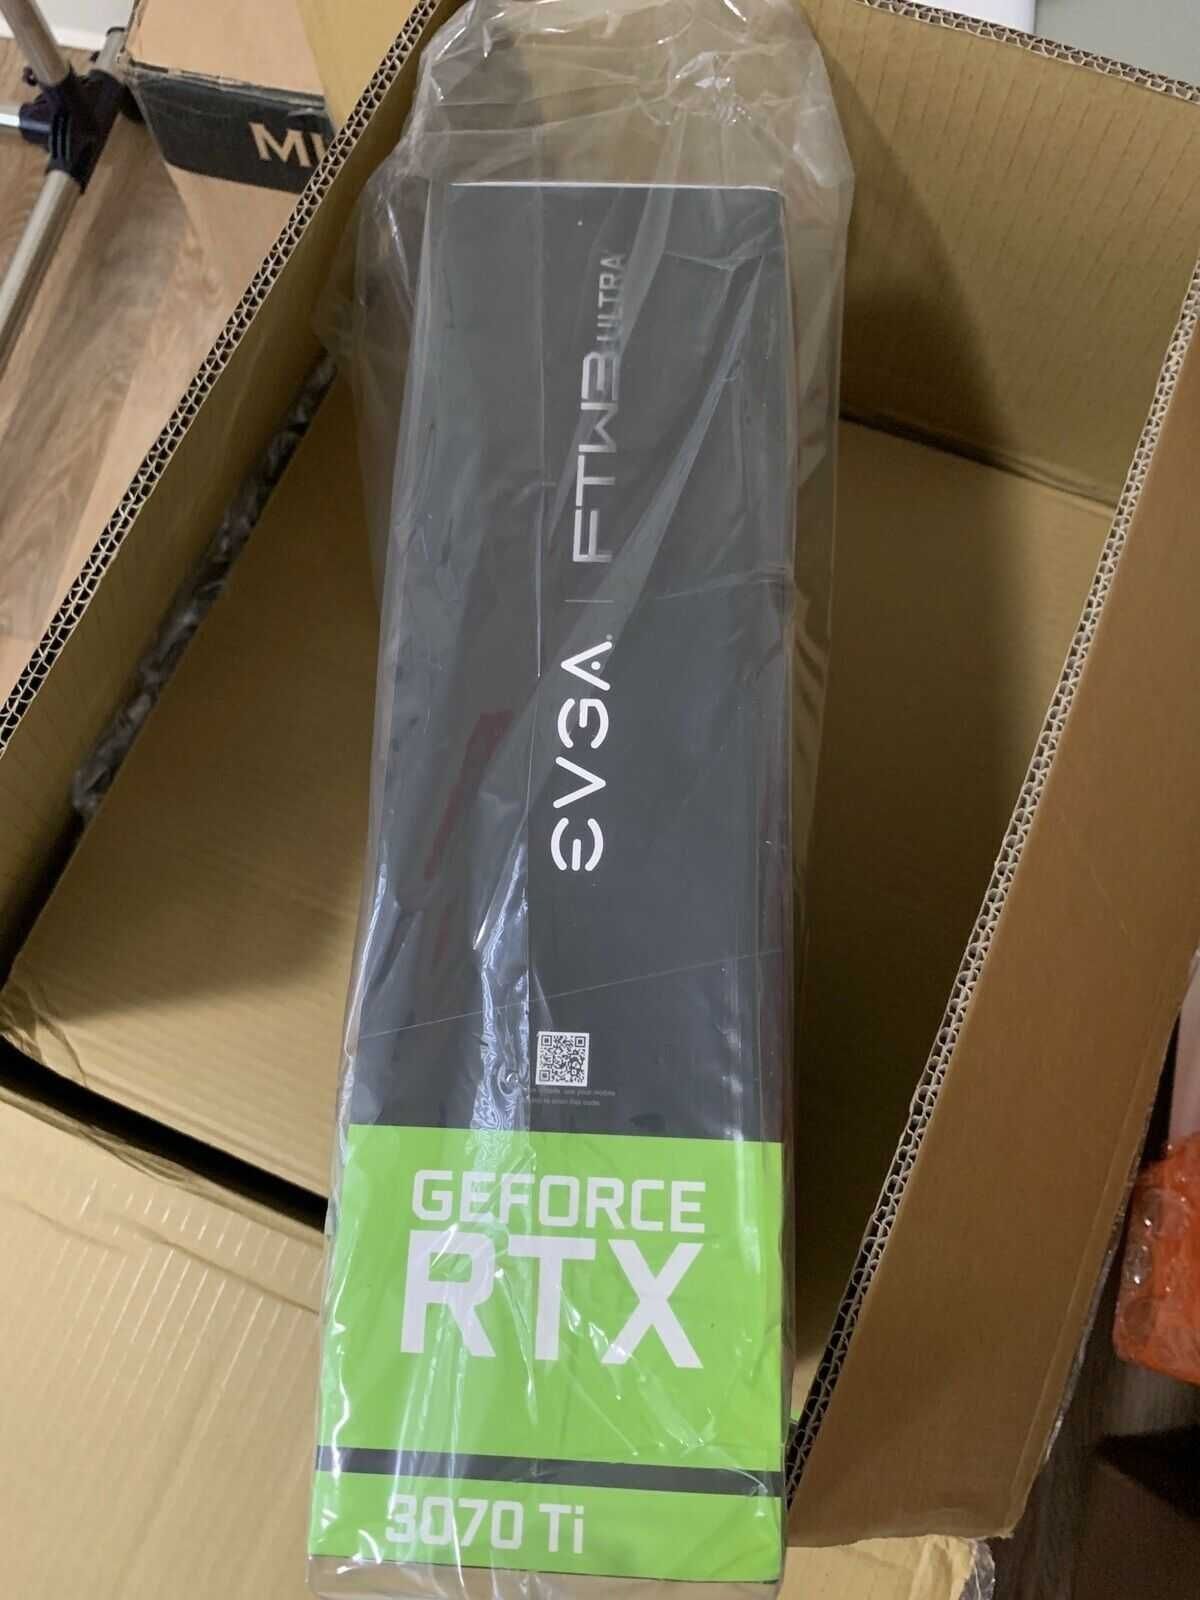 Видеокарта EVGA GeForce RTX 3070 TI FTW3 ULTRA